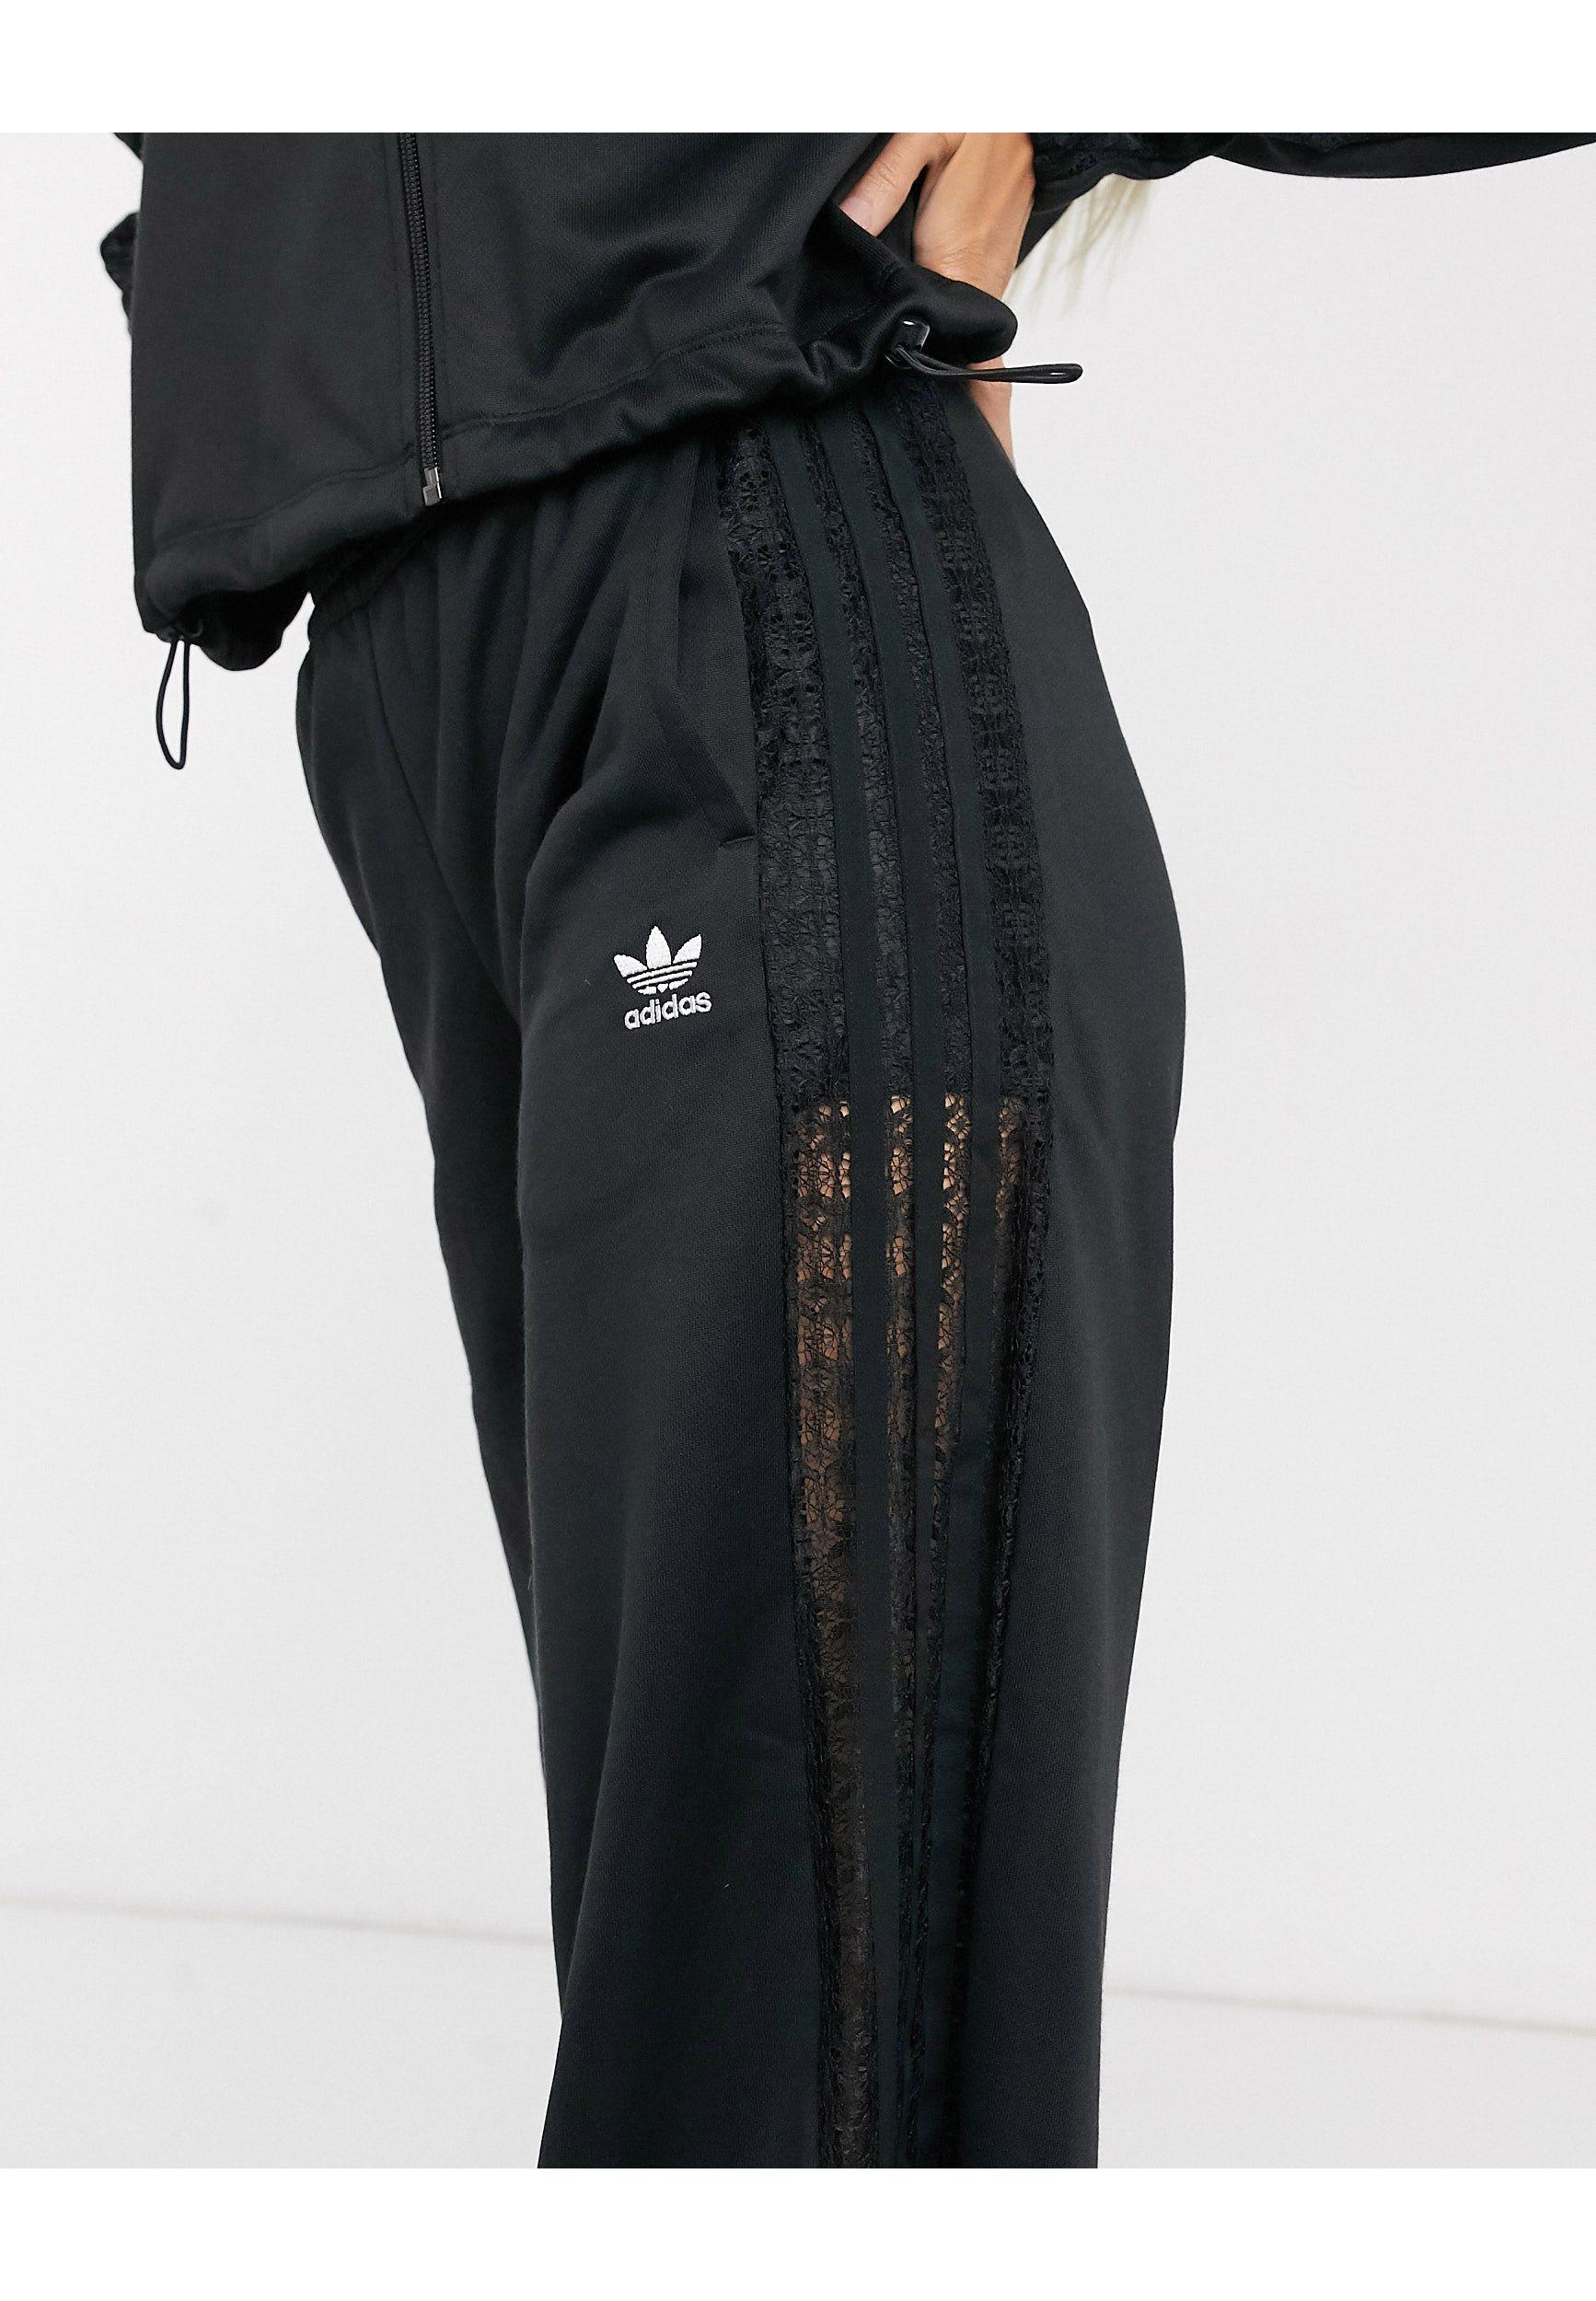 adidas originals bellista lace insert track pants in black